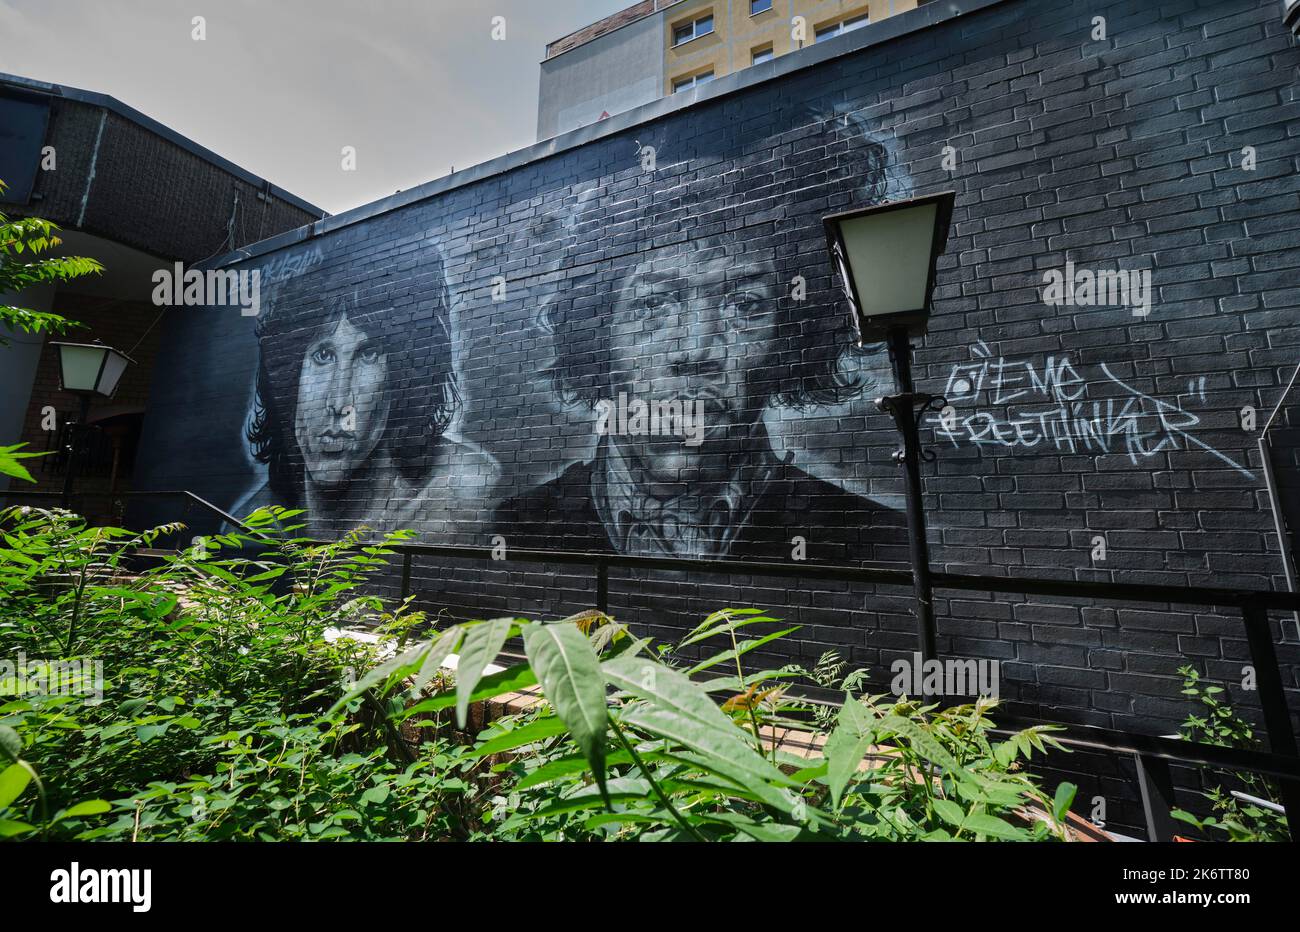 Germania, Berlino, 10. 06. 2021, graffiti di EME Freethinker, ritratti di Jim Morrison, Jimi Hendrix, muro di Blackland, rock and metal pub Foto Stock